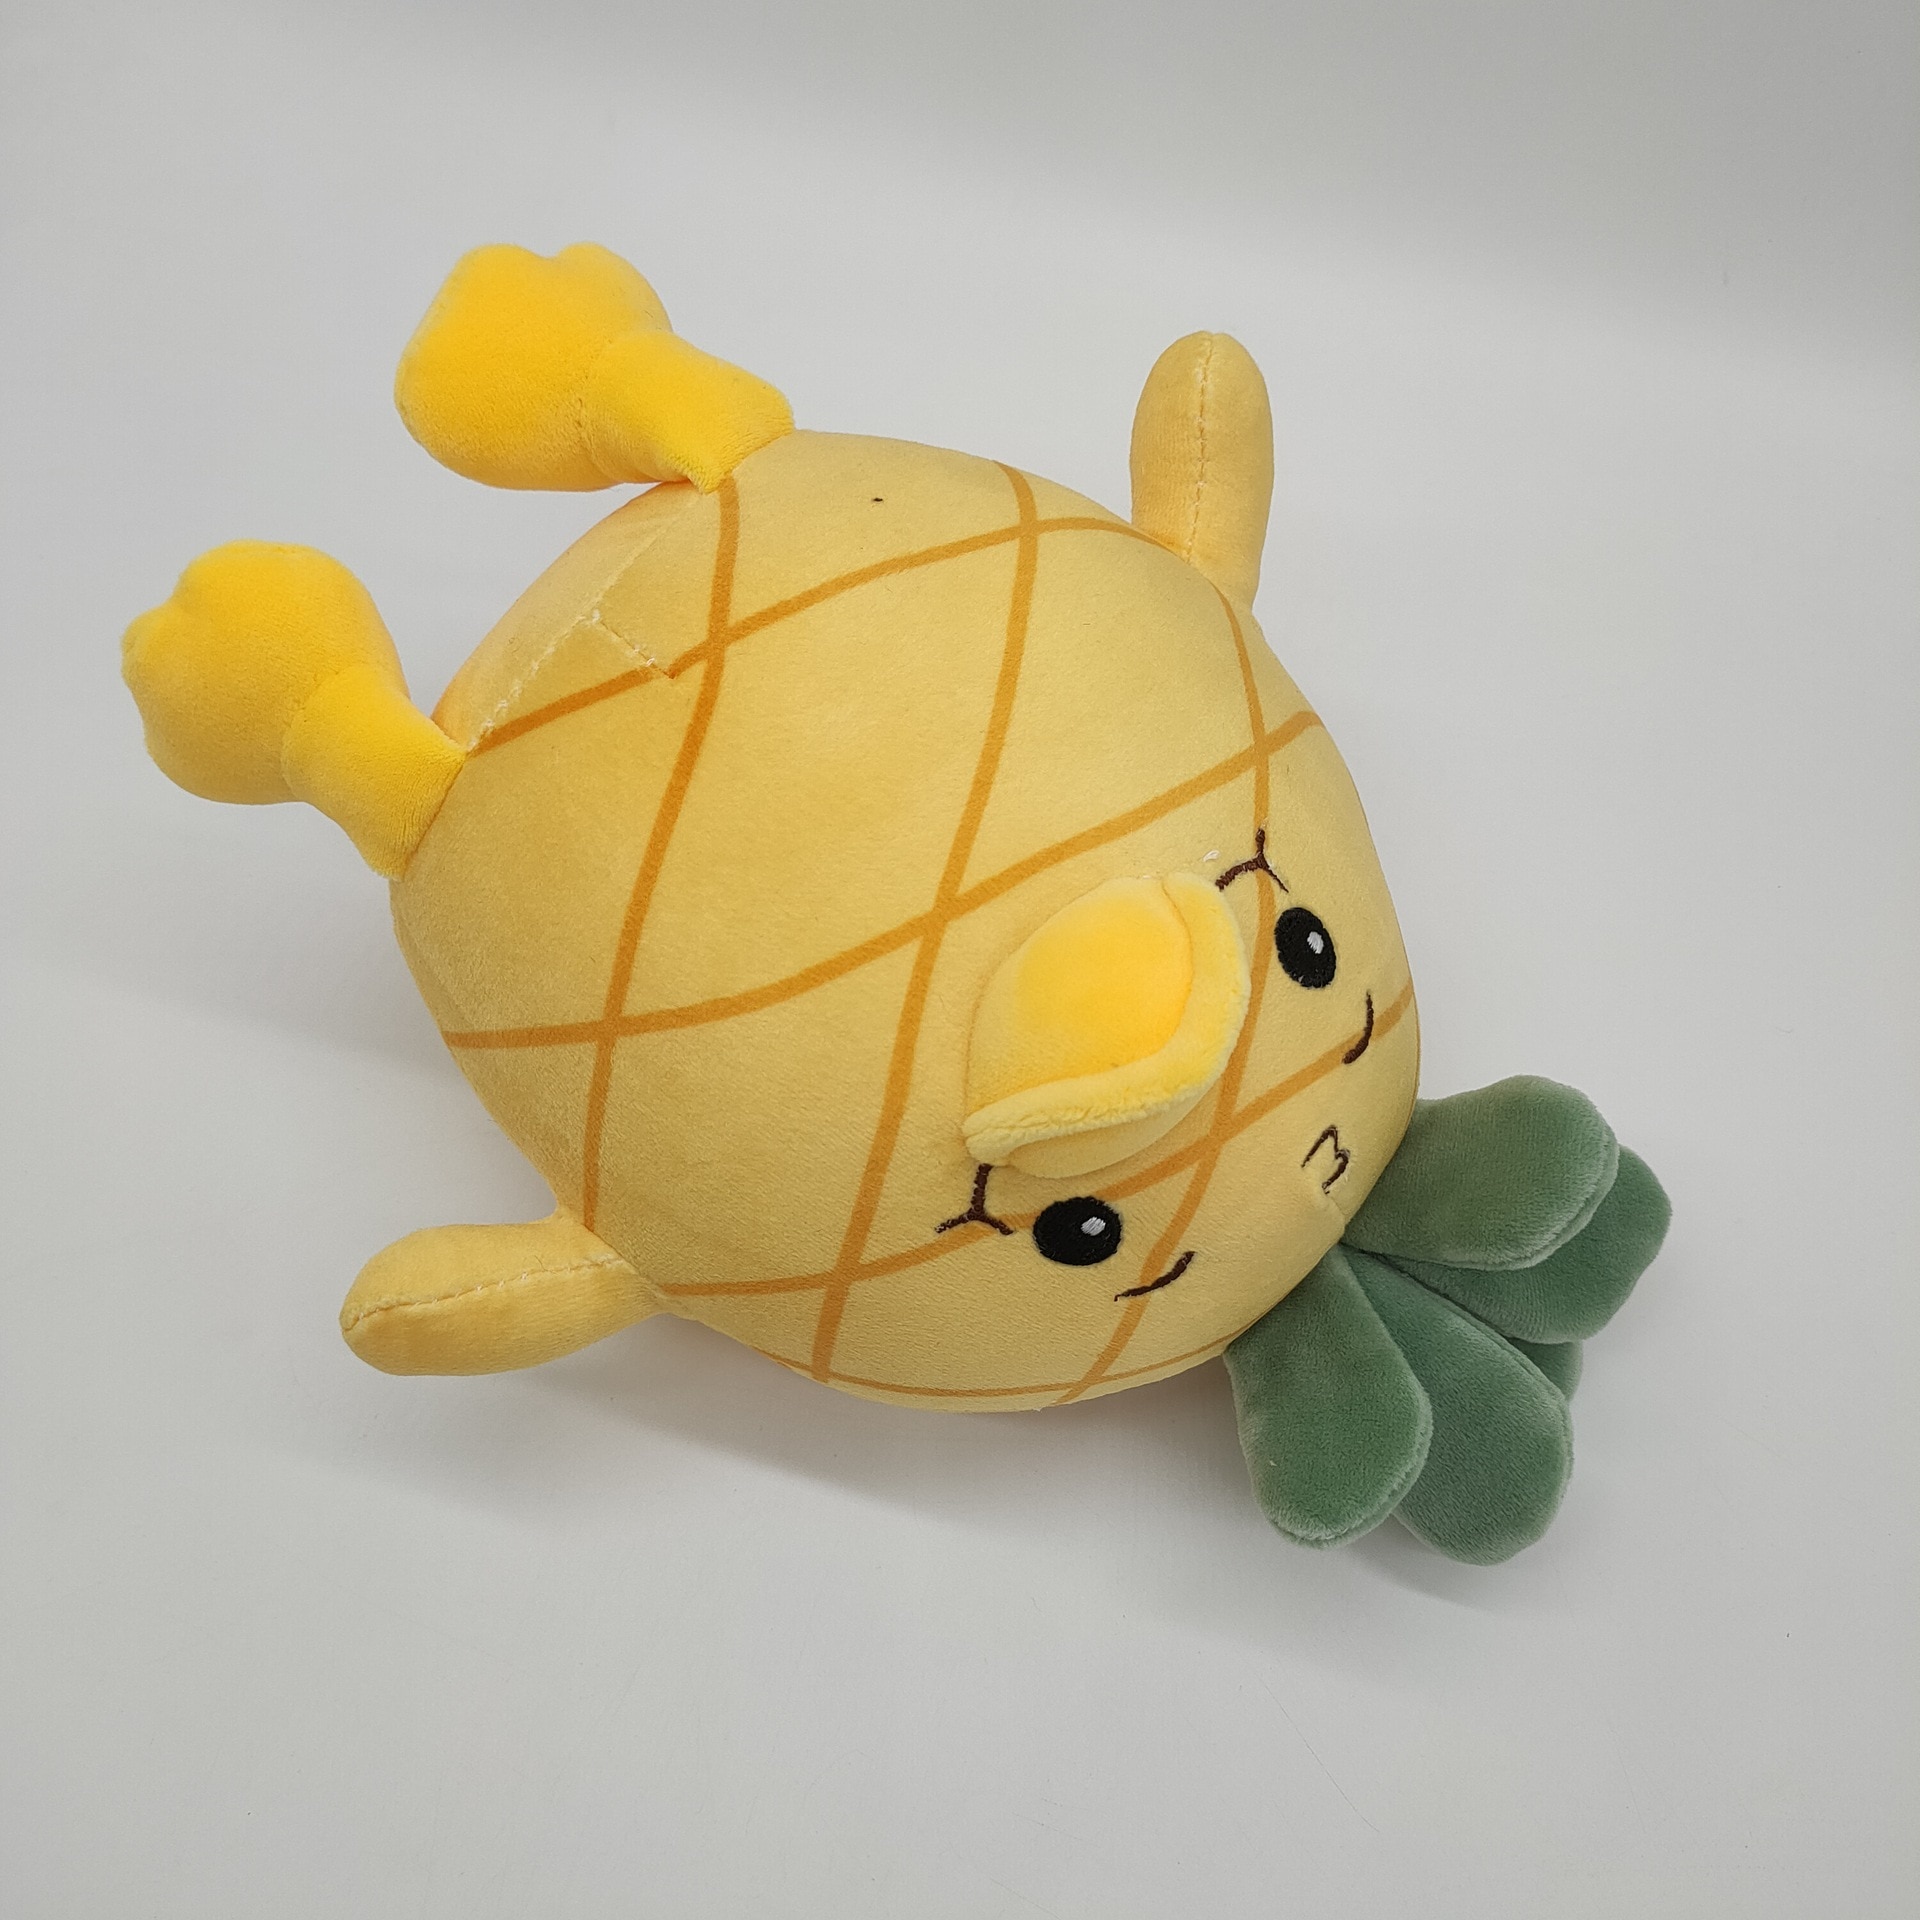 27CM Kawaii Georgie Plush Toy Pineapple Duck Soft Stuffed Animal Plush Pillow Doll Children's Birthday Gift Toy Wholesale